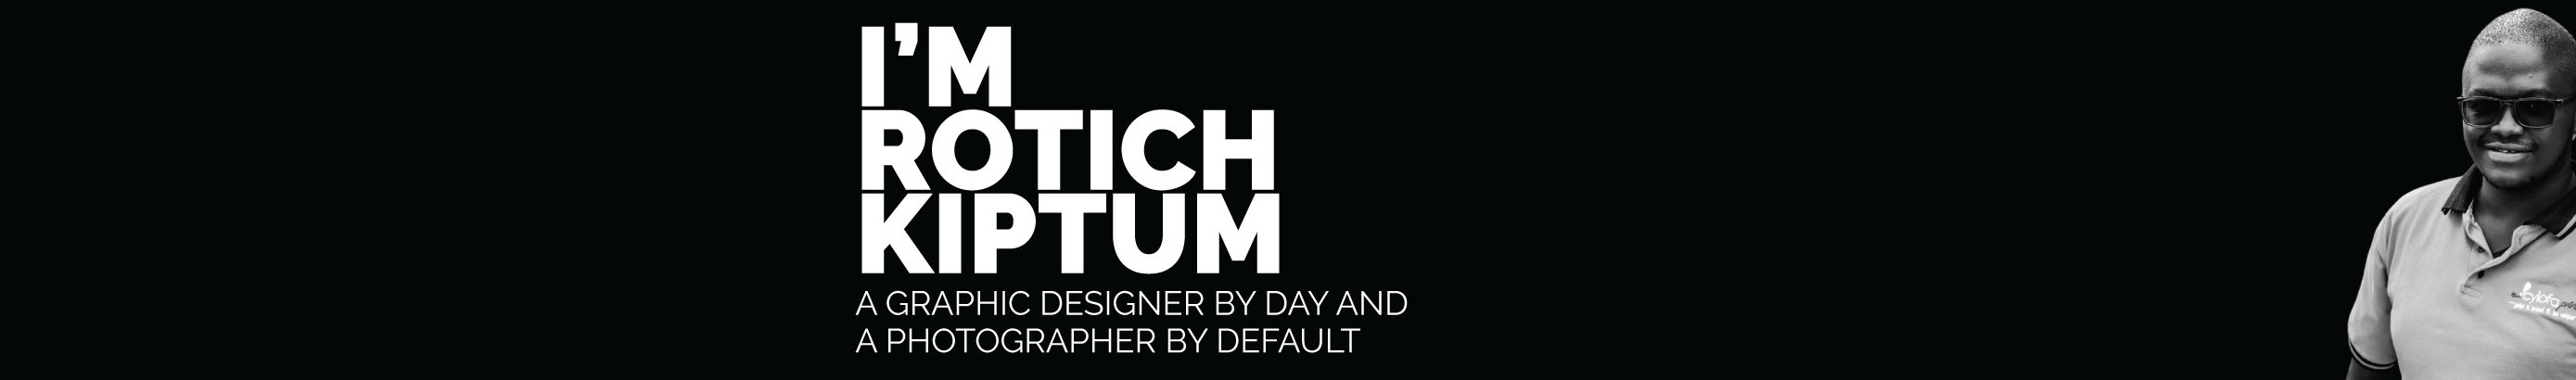 Rotich Kiptum's profile banner